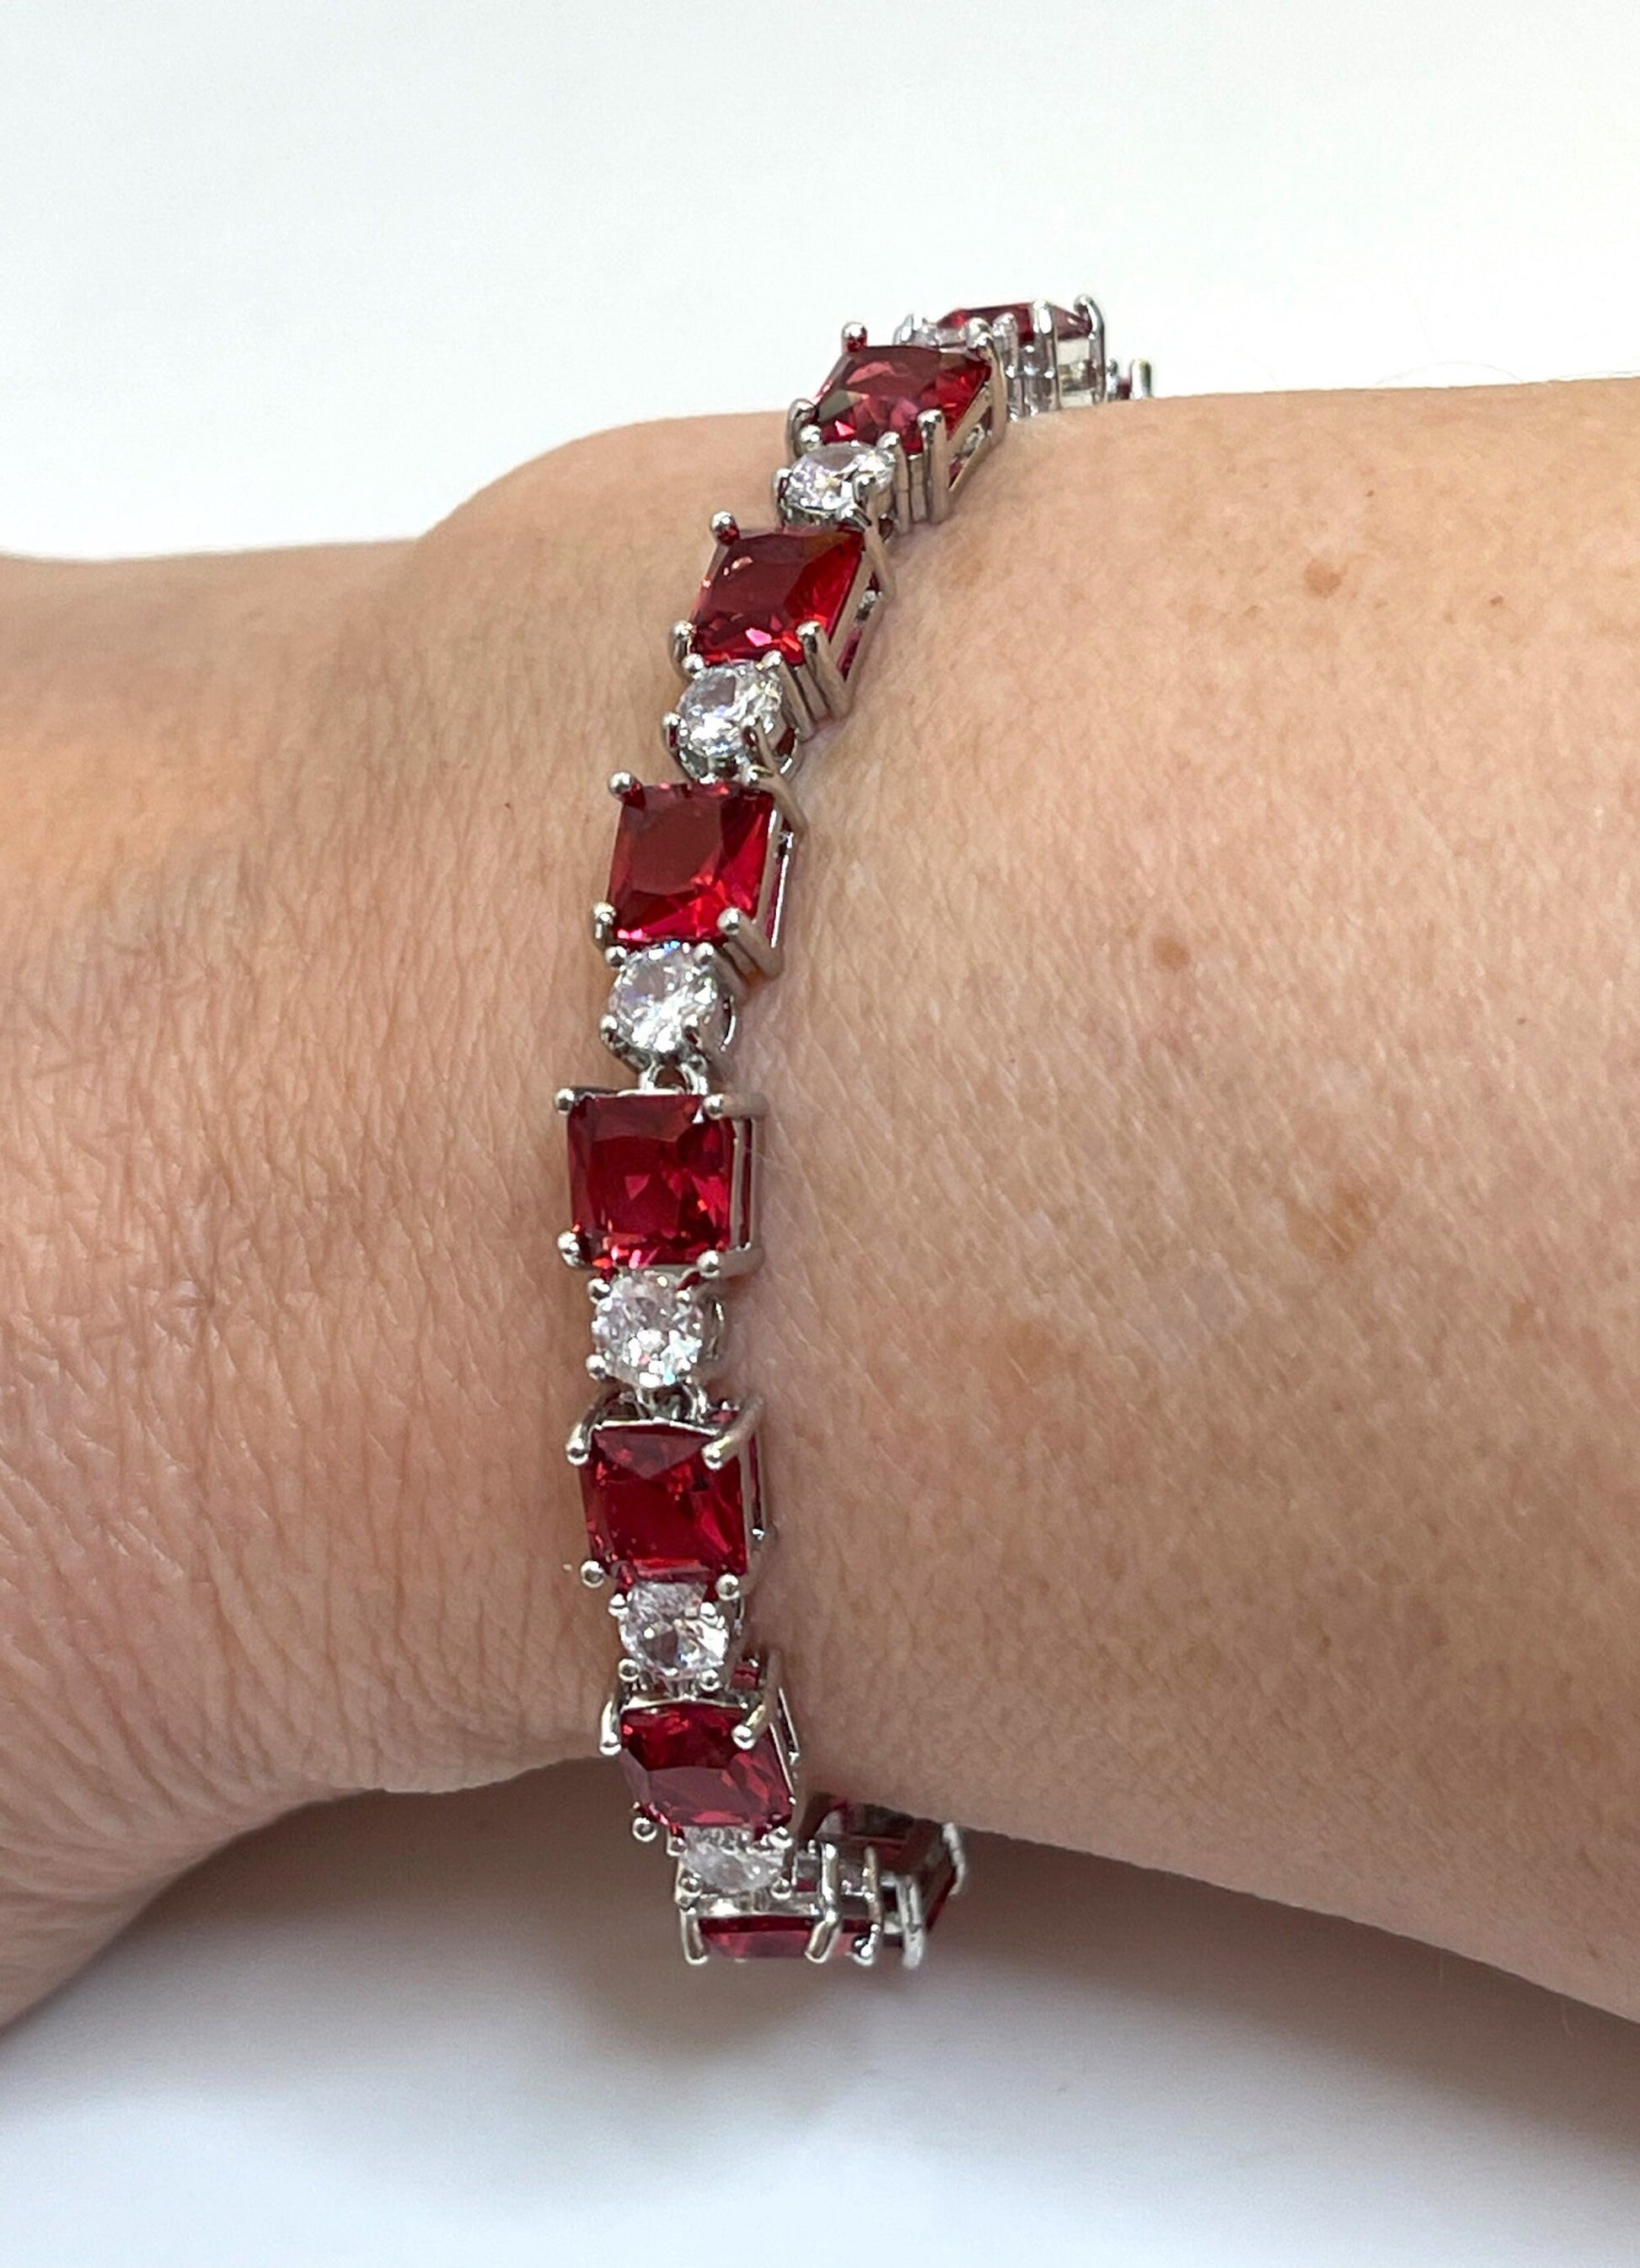 Ruby Crystal Silver Bracelet | Silver Plated, Adjustable Bracelet, CZ Clear Red Crystal Chain, Bracelets for Women